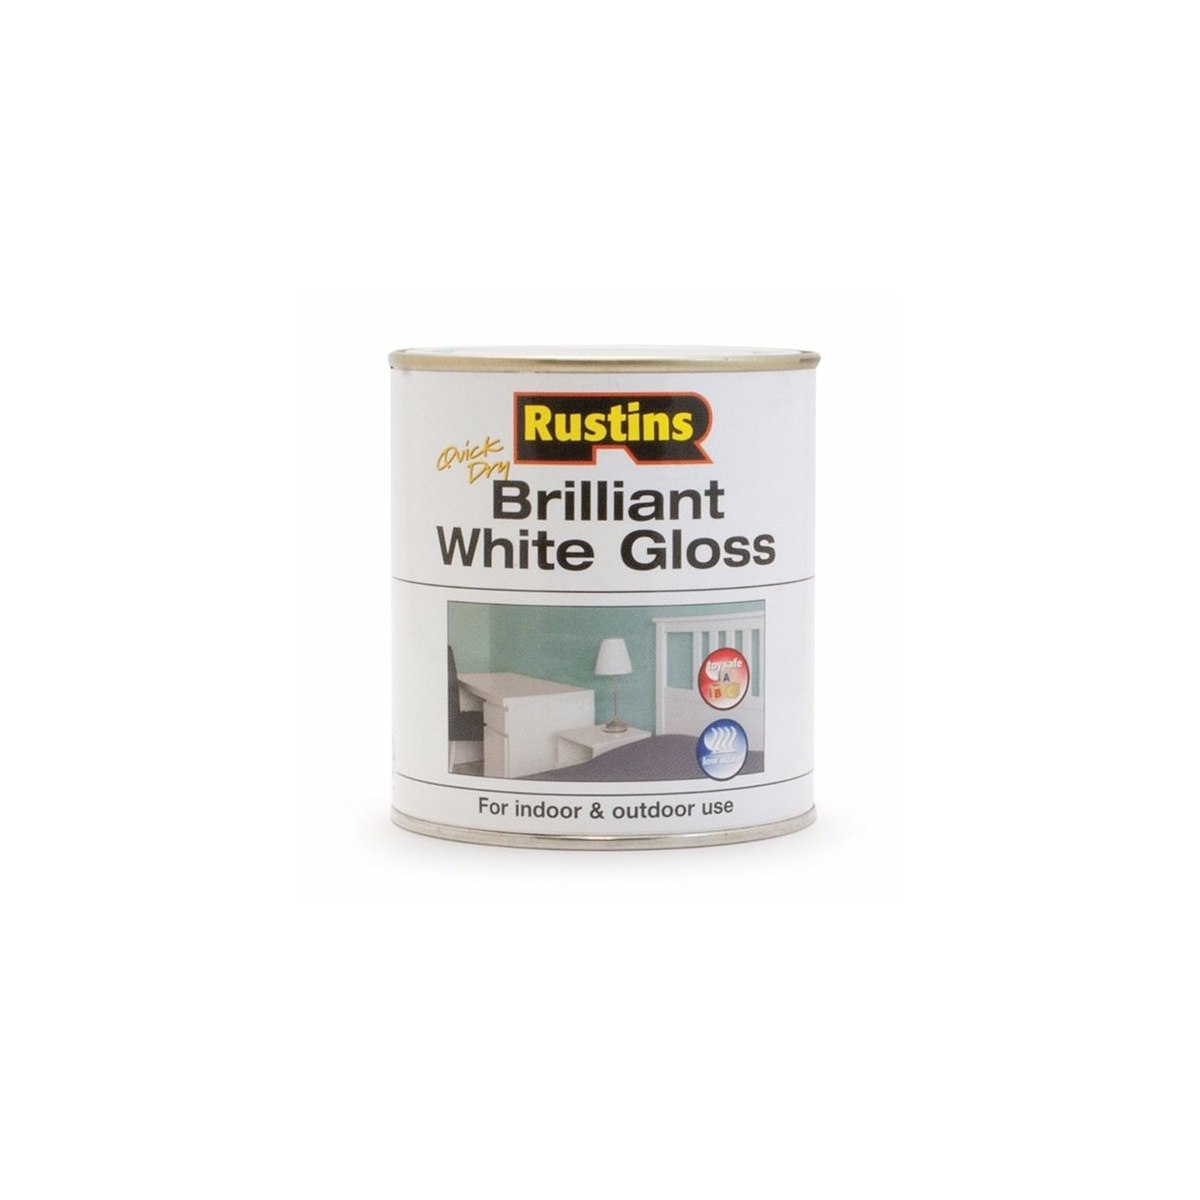 Rustins Quick Dry Brilliant White Gloss Paint 1 Litre